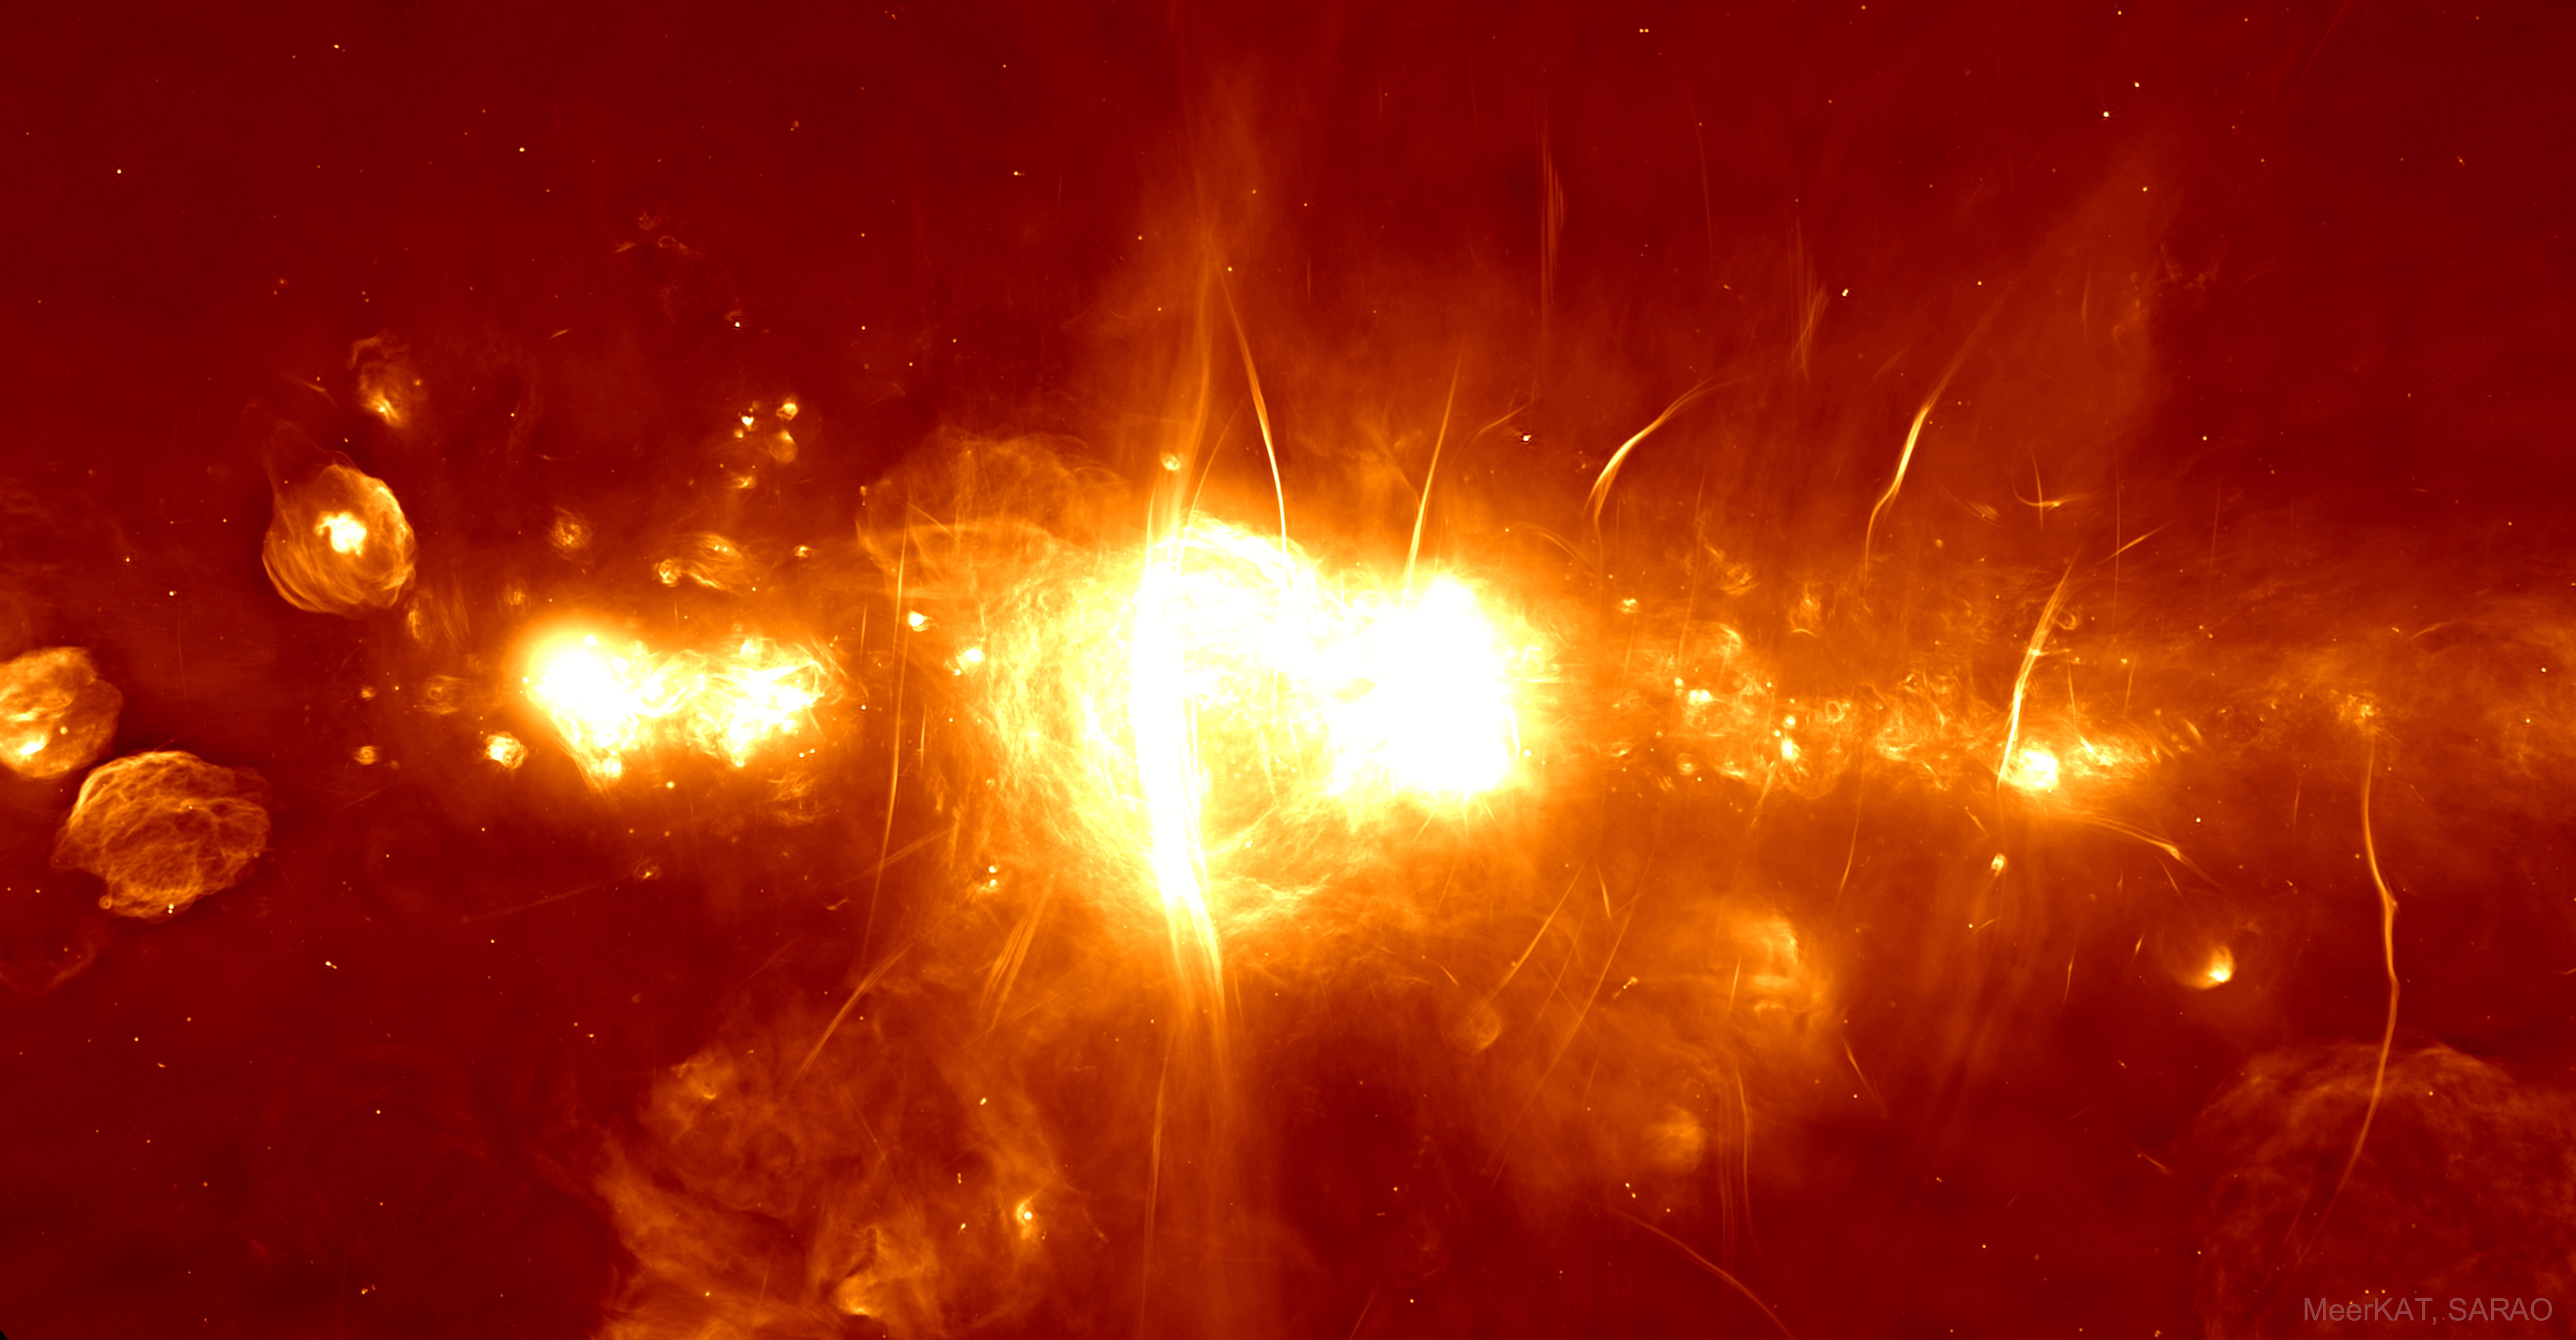 Centr Galaktiki v radiodiapazone ot MeerKAT